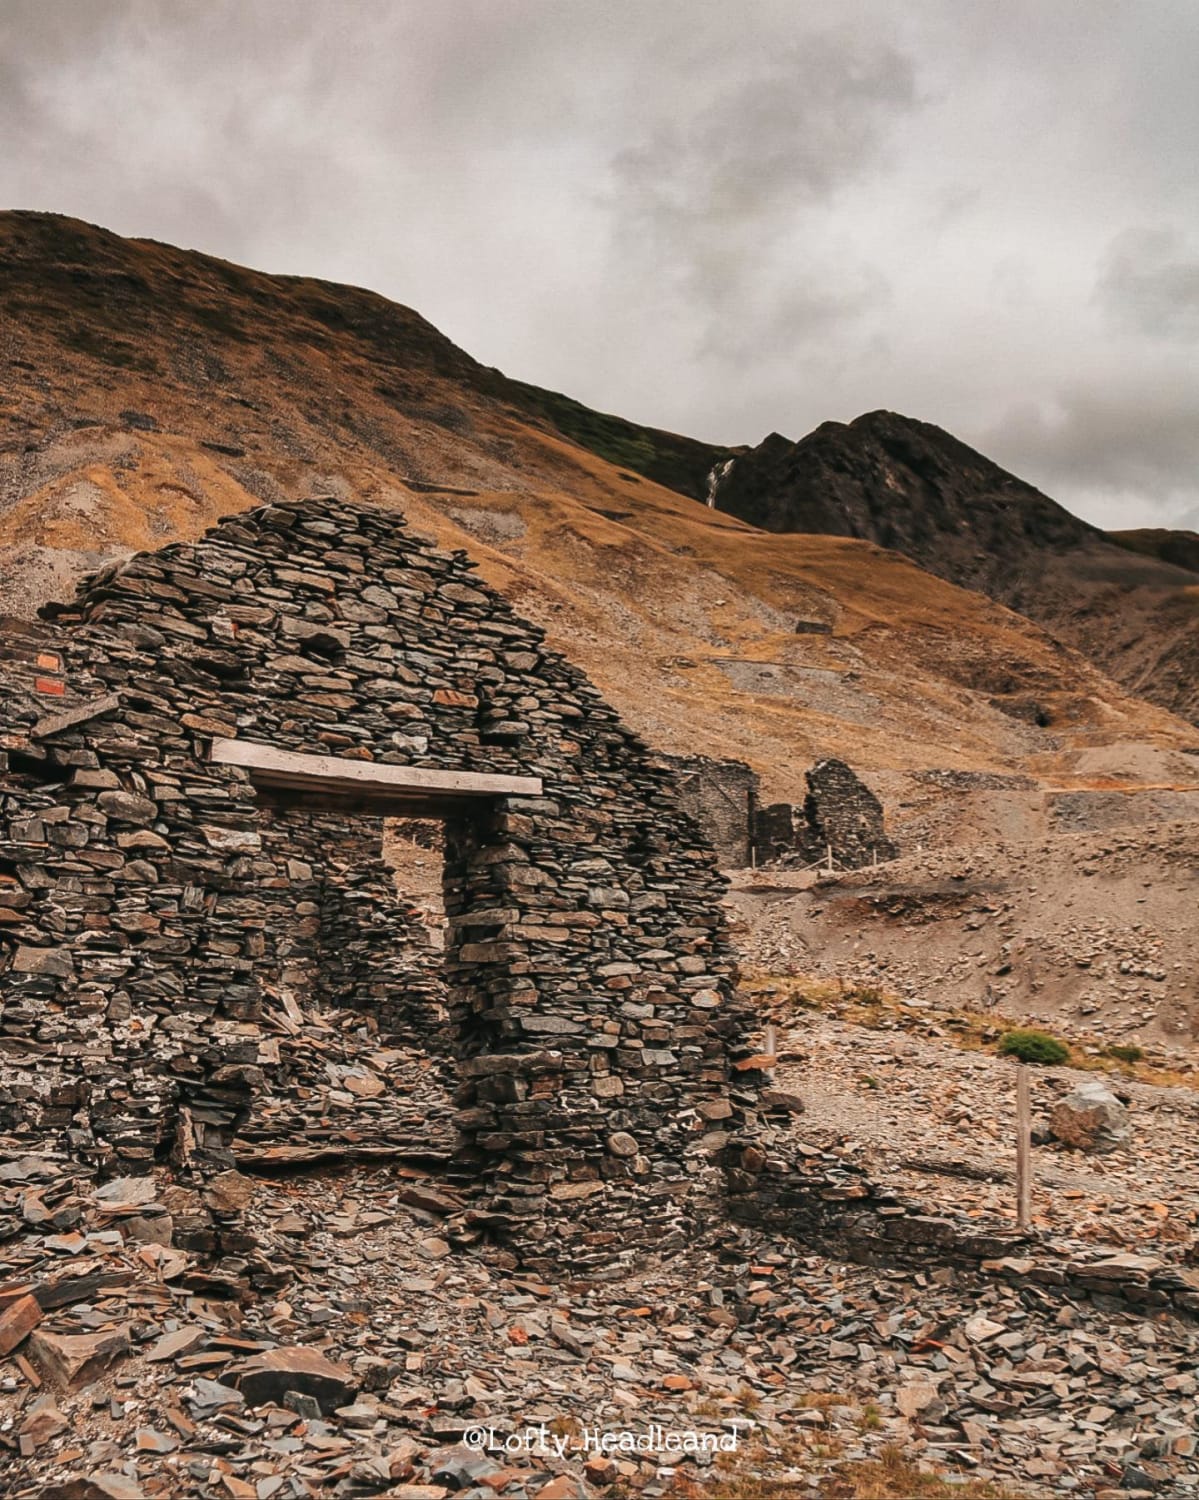 Abandoned mining town. Wales, UK. Insta: Lofty_Headleand